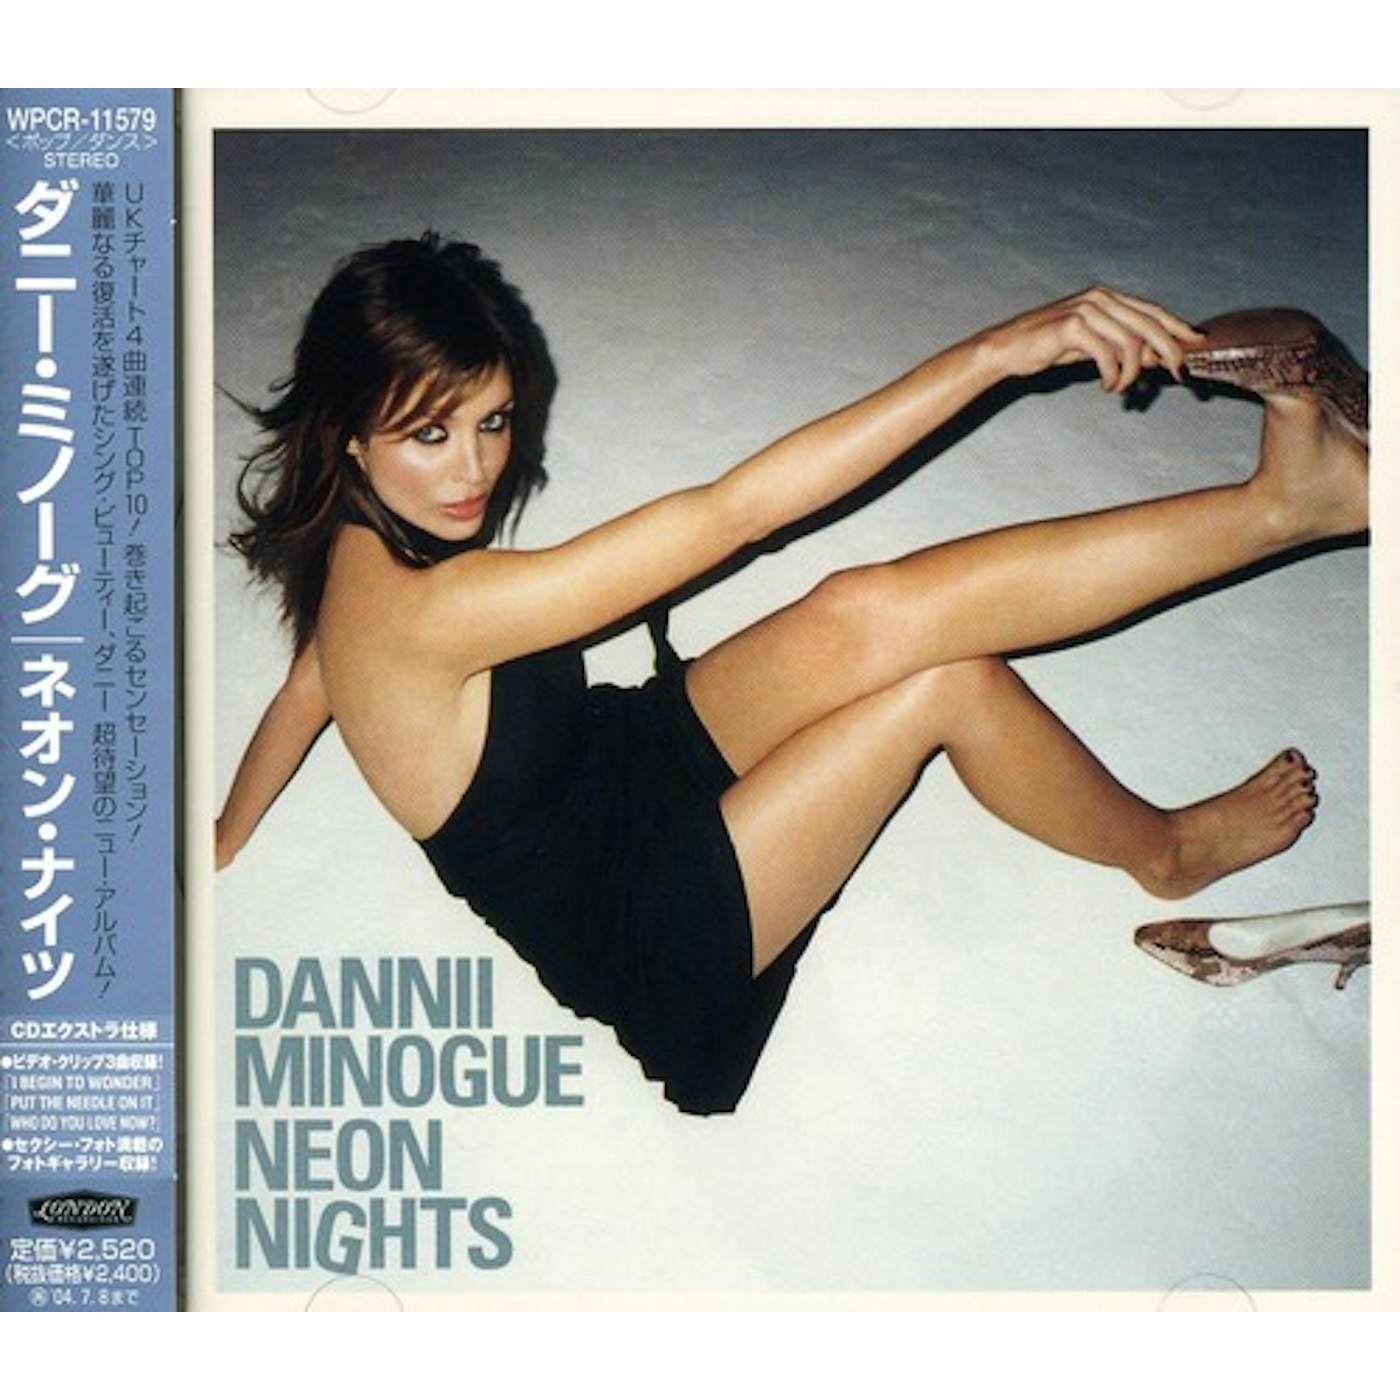 Dannii Minogue NEON NIGHTS CD